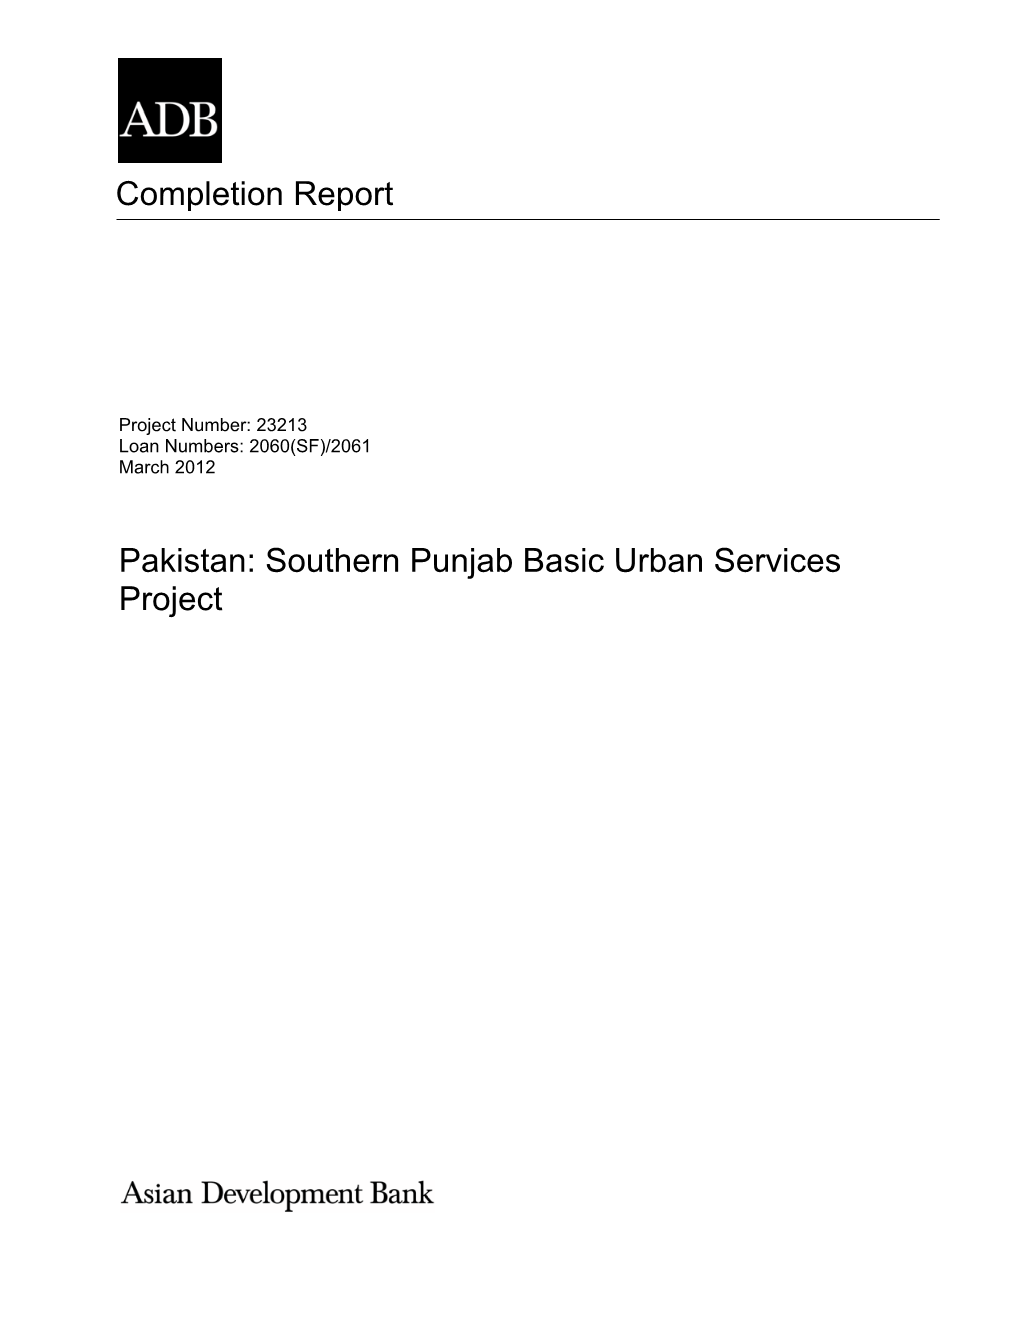 Pakistan: Southern Punjab Basic Urban Services Project